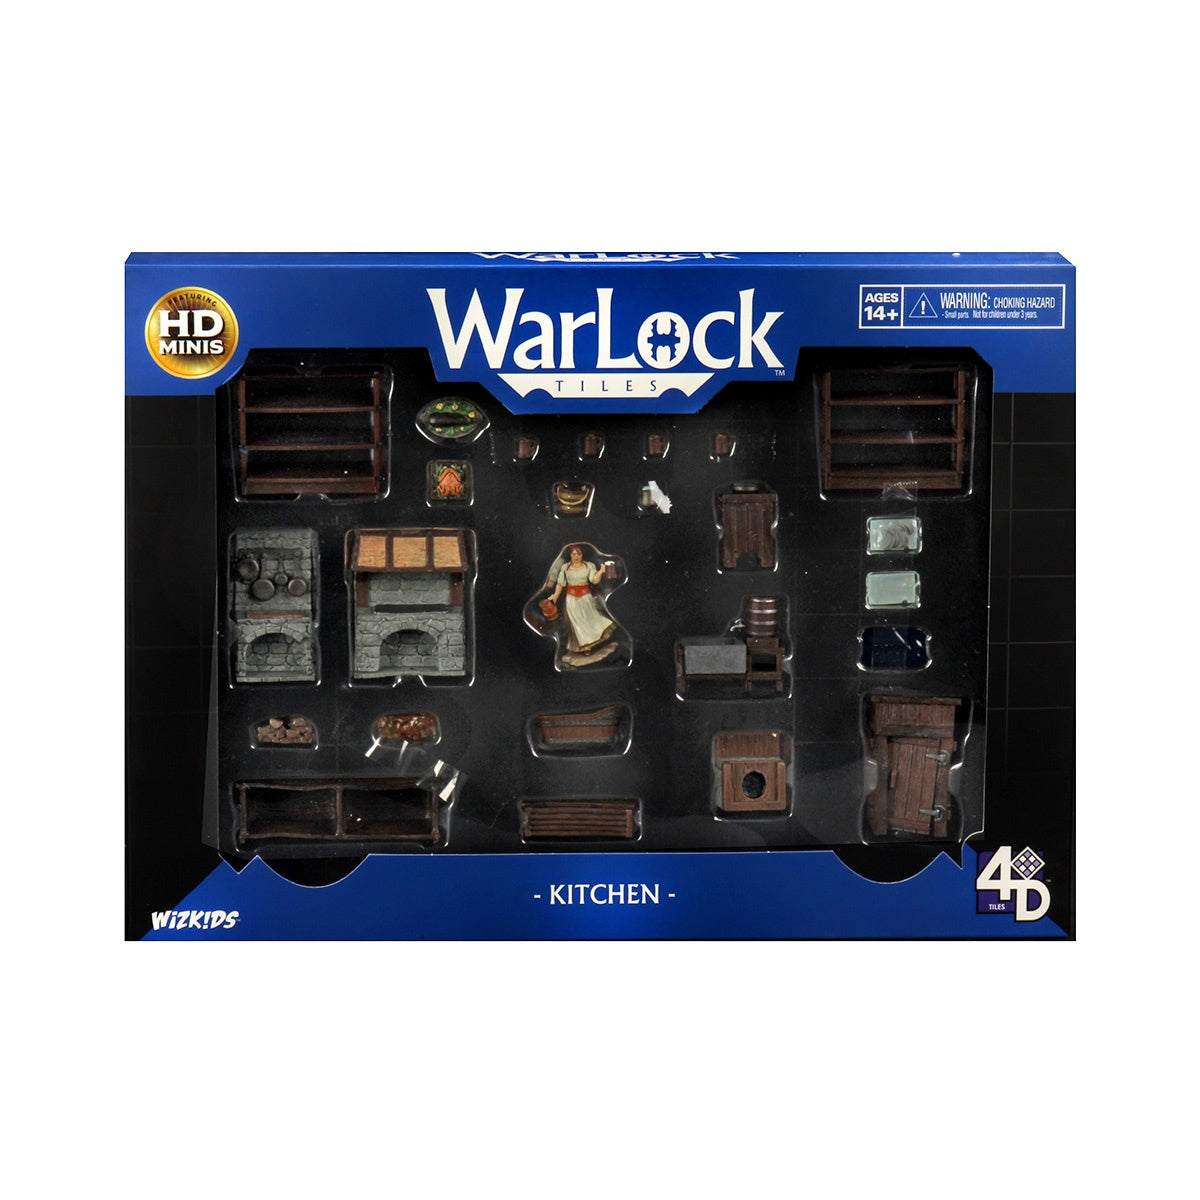 WarLock Tiles Accessory Kitchen